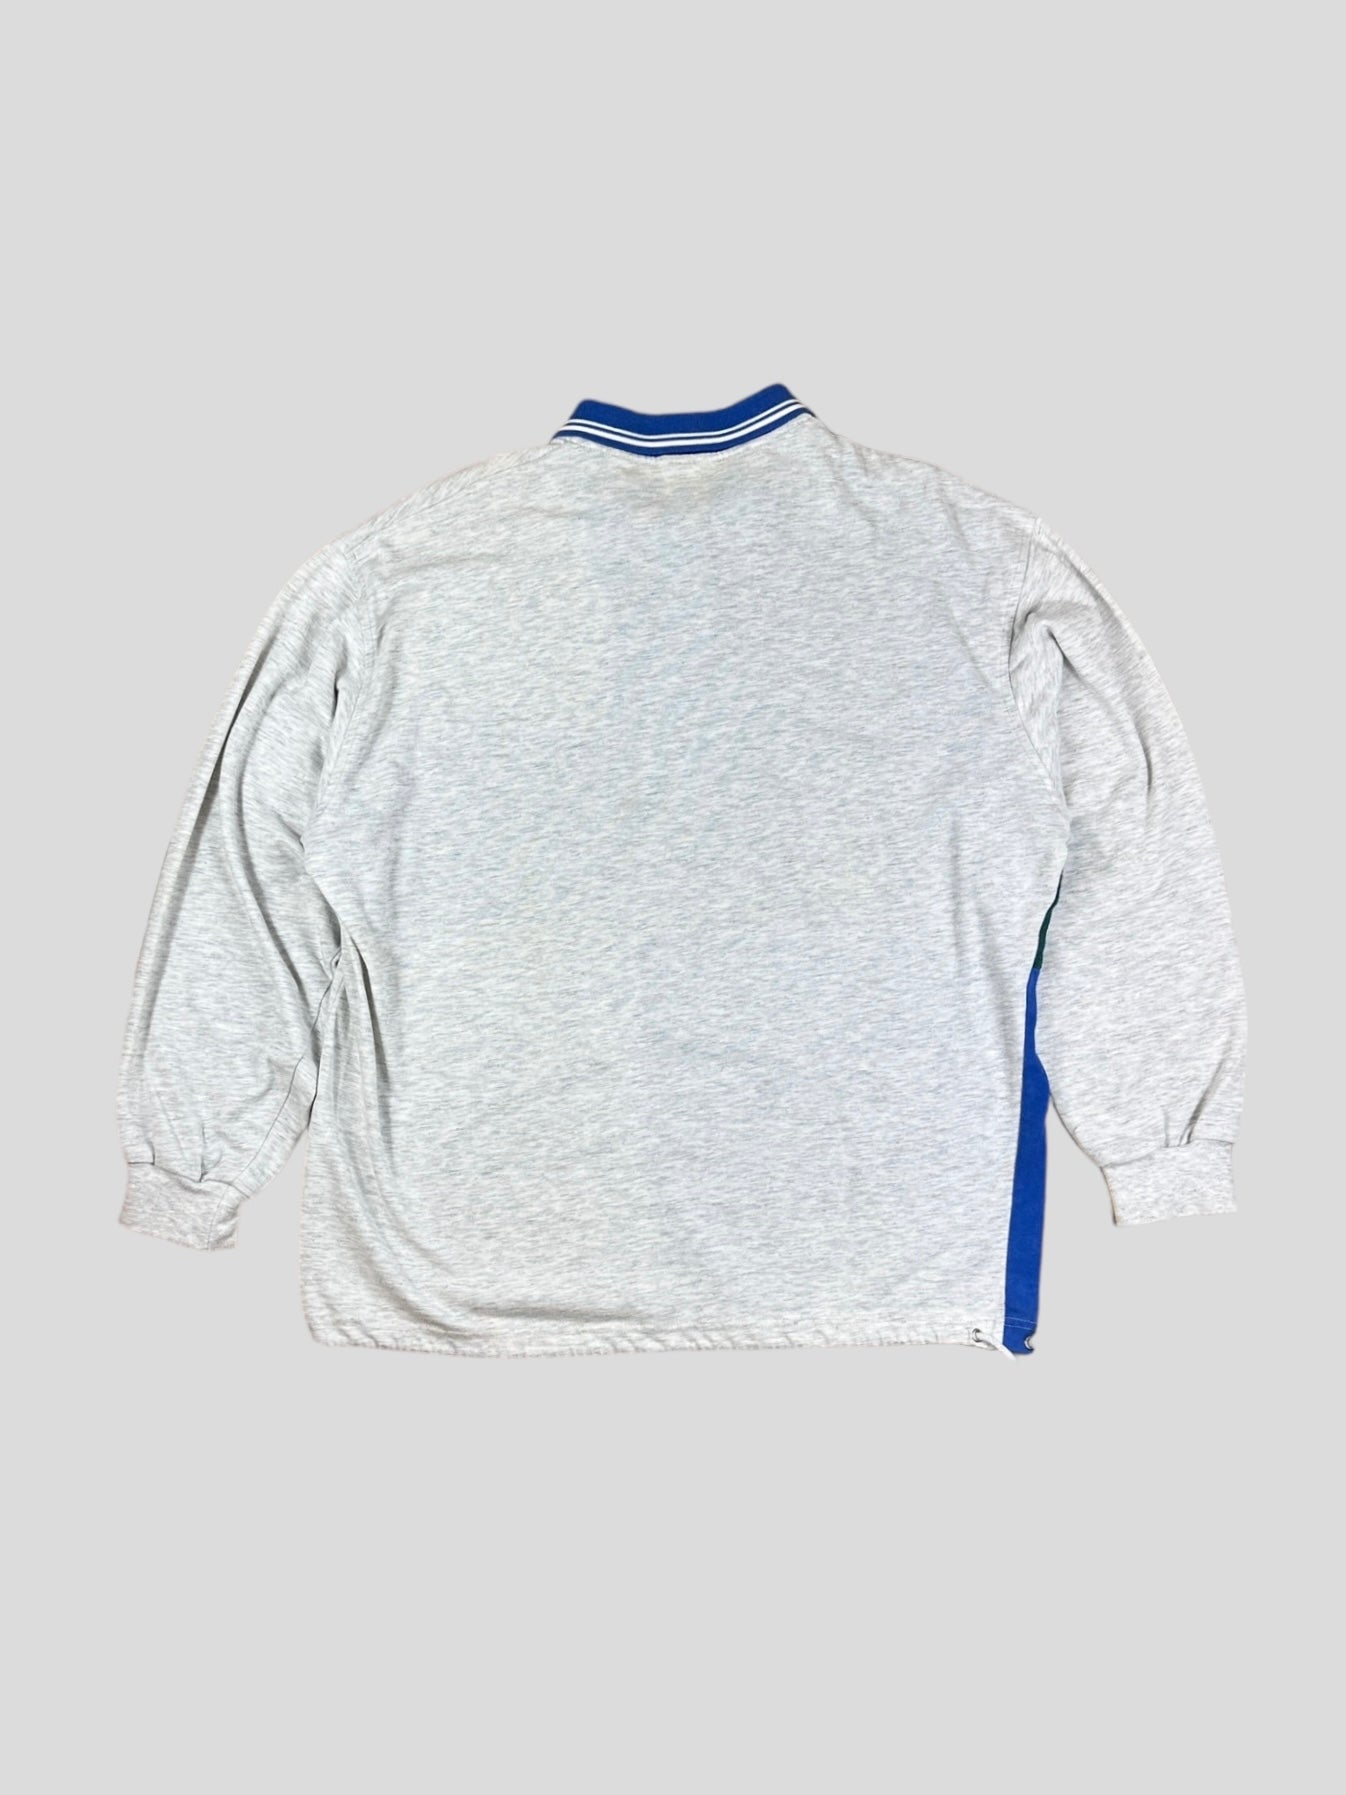 Vintage adidas blue collared sweatshirt